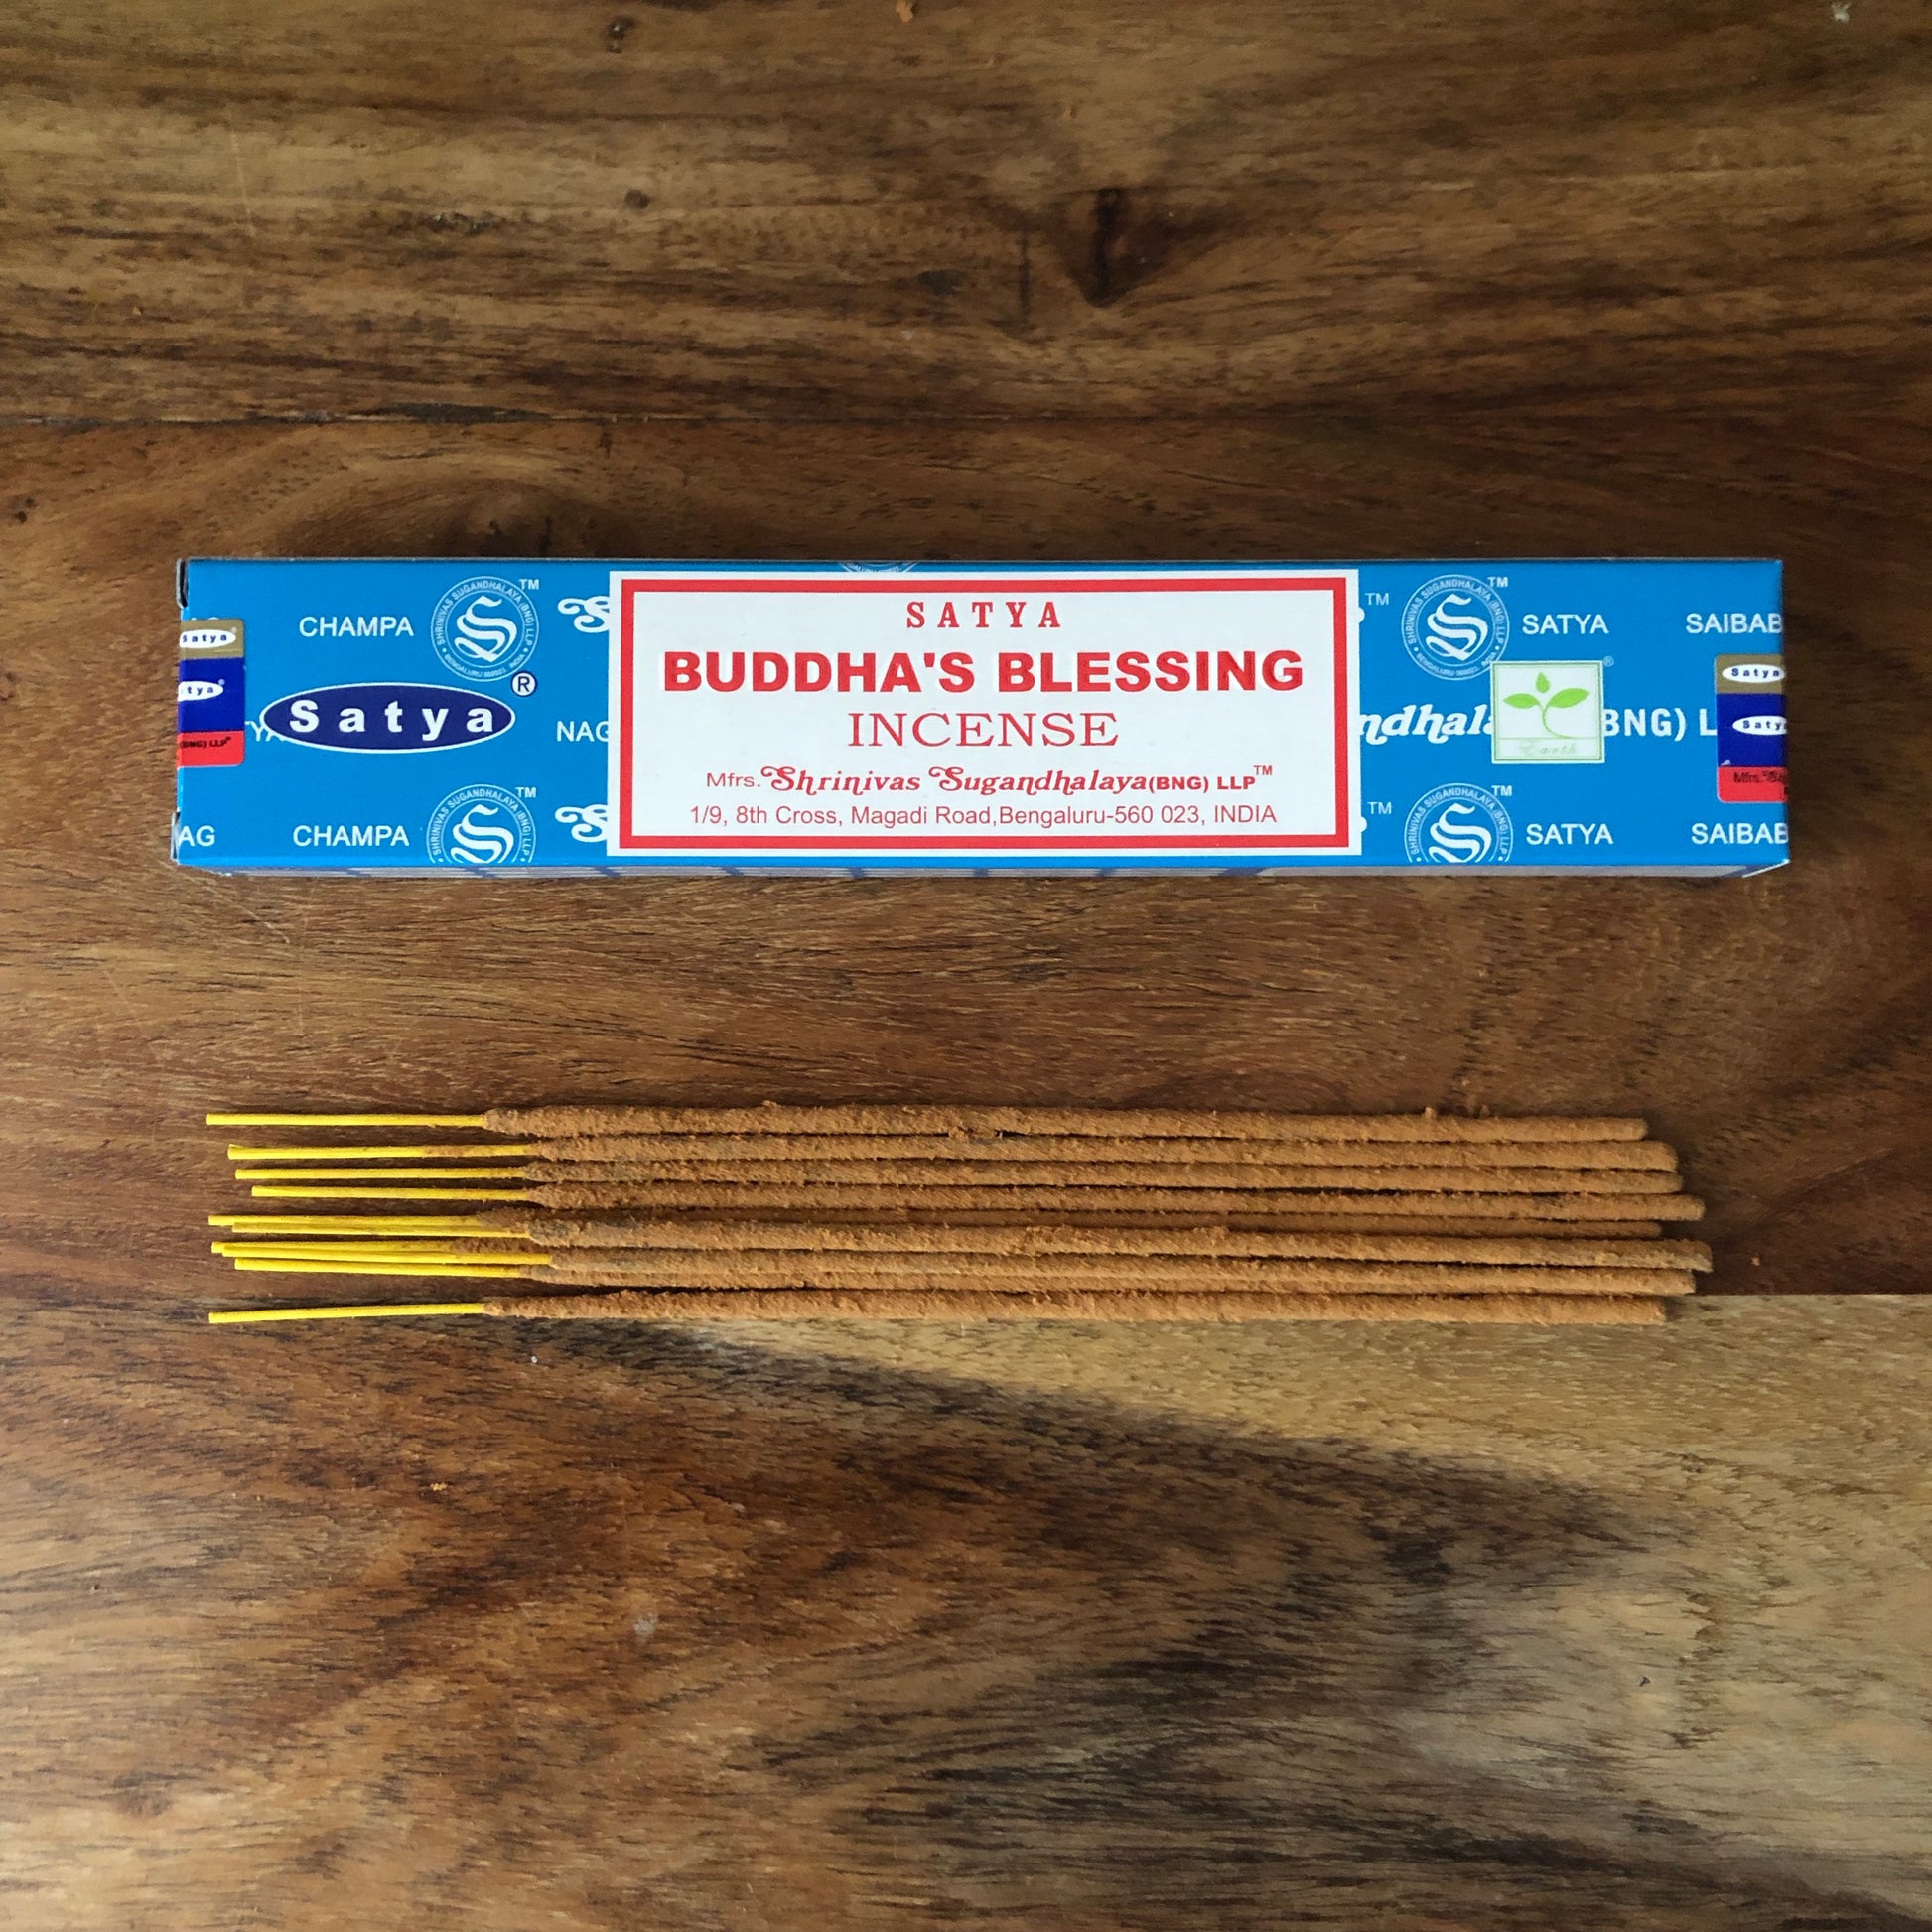 Satya Nag Champa Incense – buddhamouse